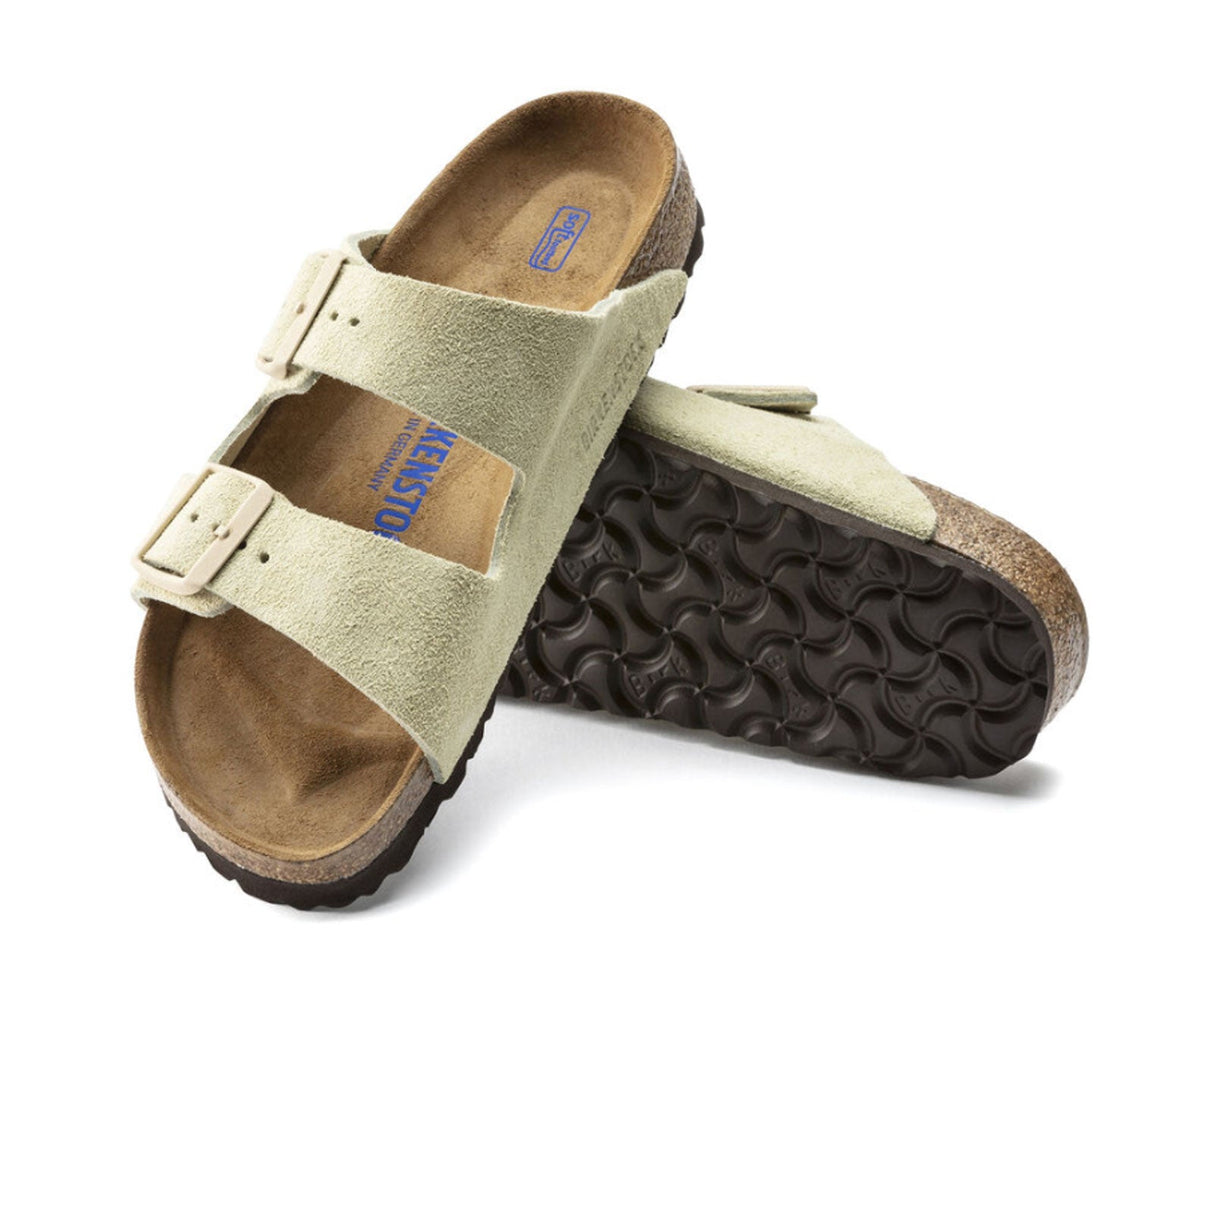 Birkenstock Arizona Narrow Soft Footbed Sandal (Women) - Almond Suede Sandals - Slide - The Heel Shoe Fitters